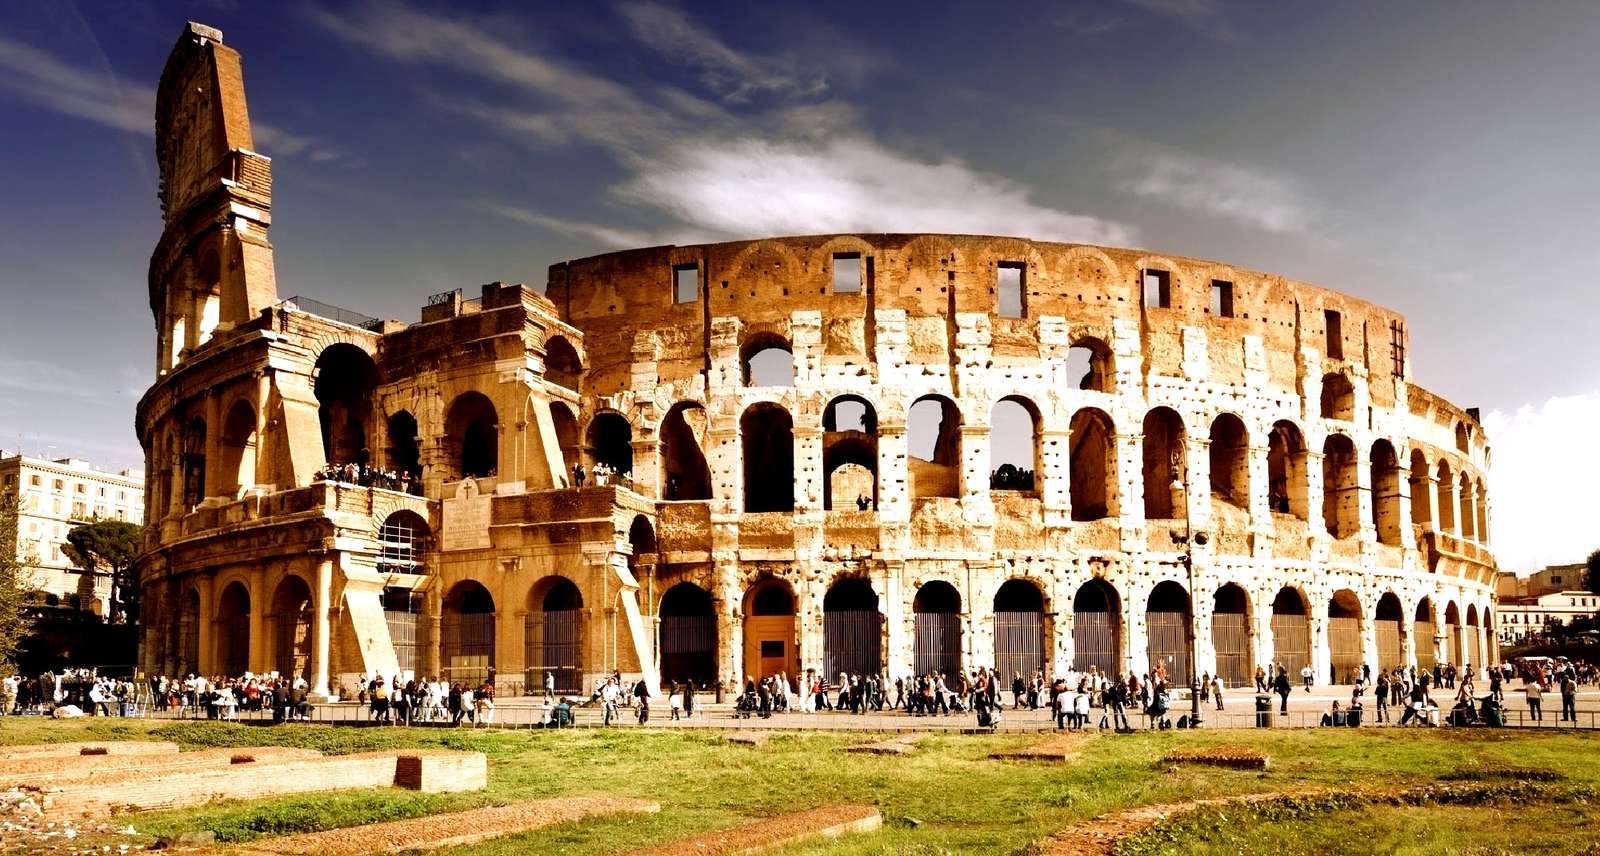 The Colosseum online puzzle